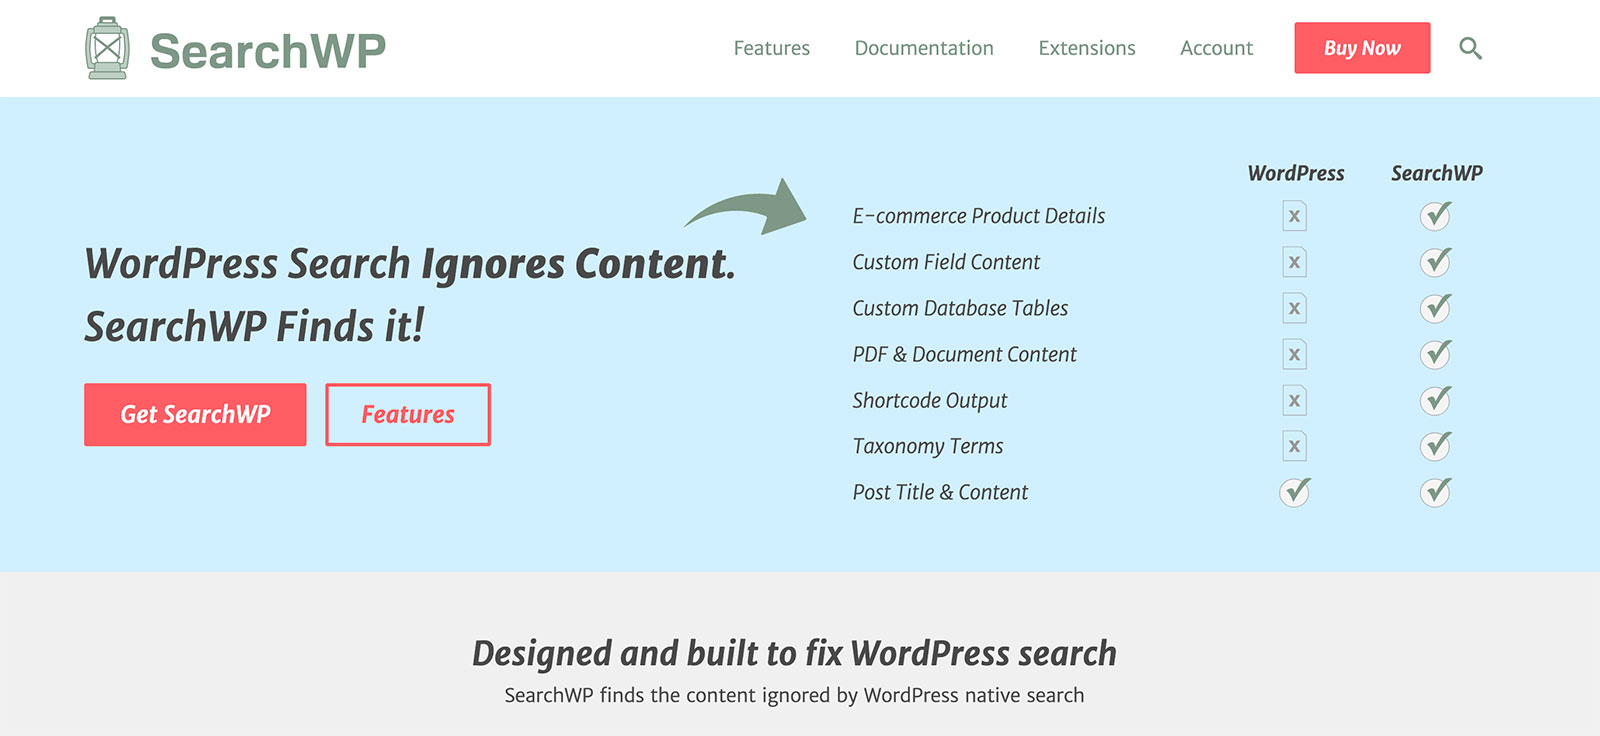 SearchWP Homepage